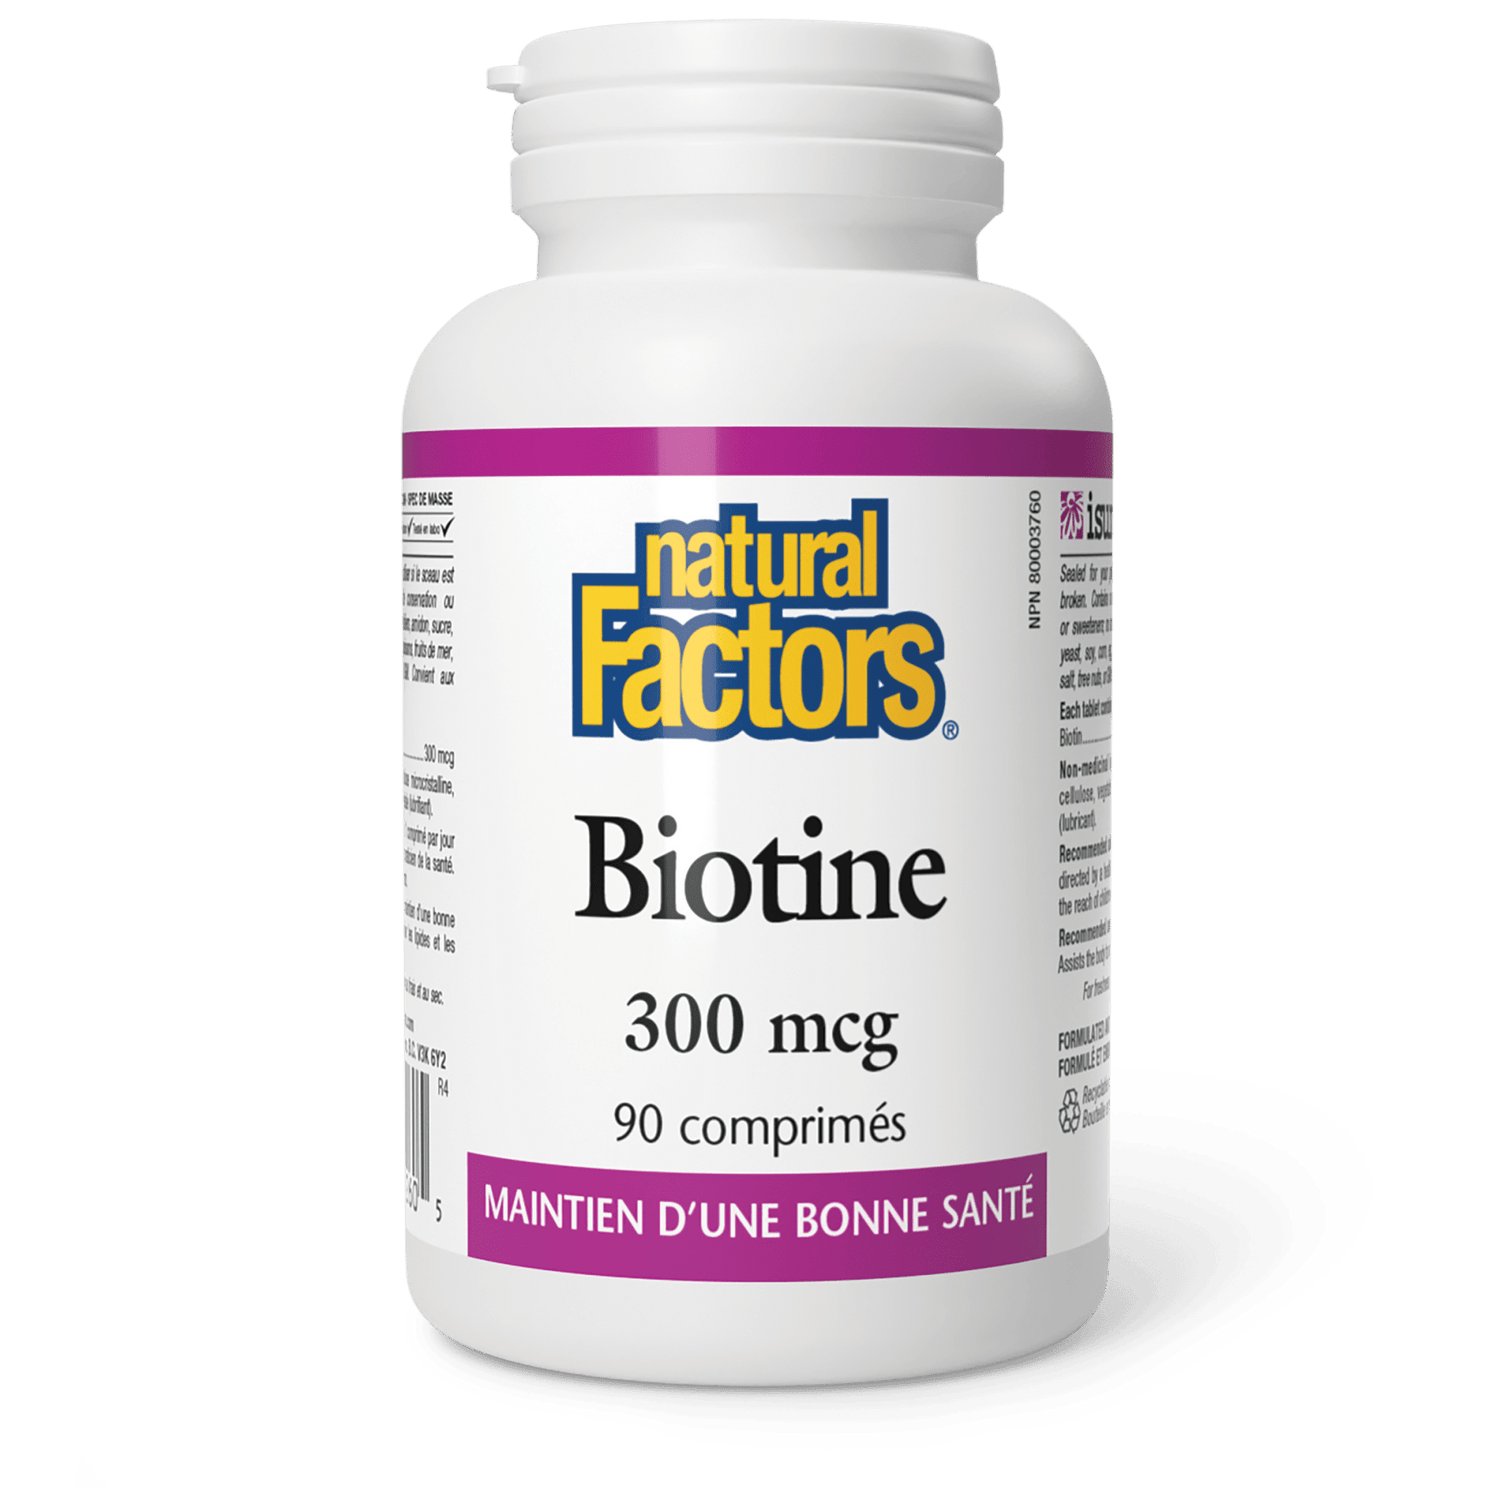 Biotine 300 mcg, Natural Factors|v|image|1260